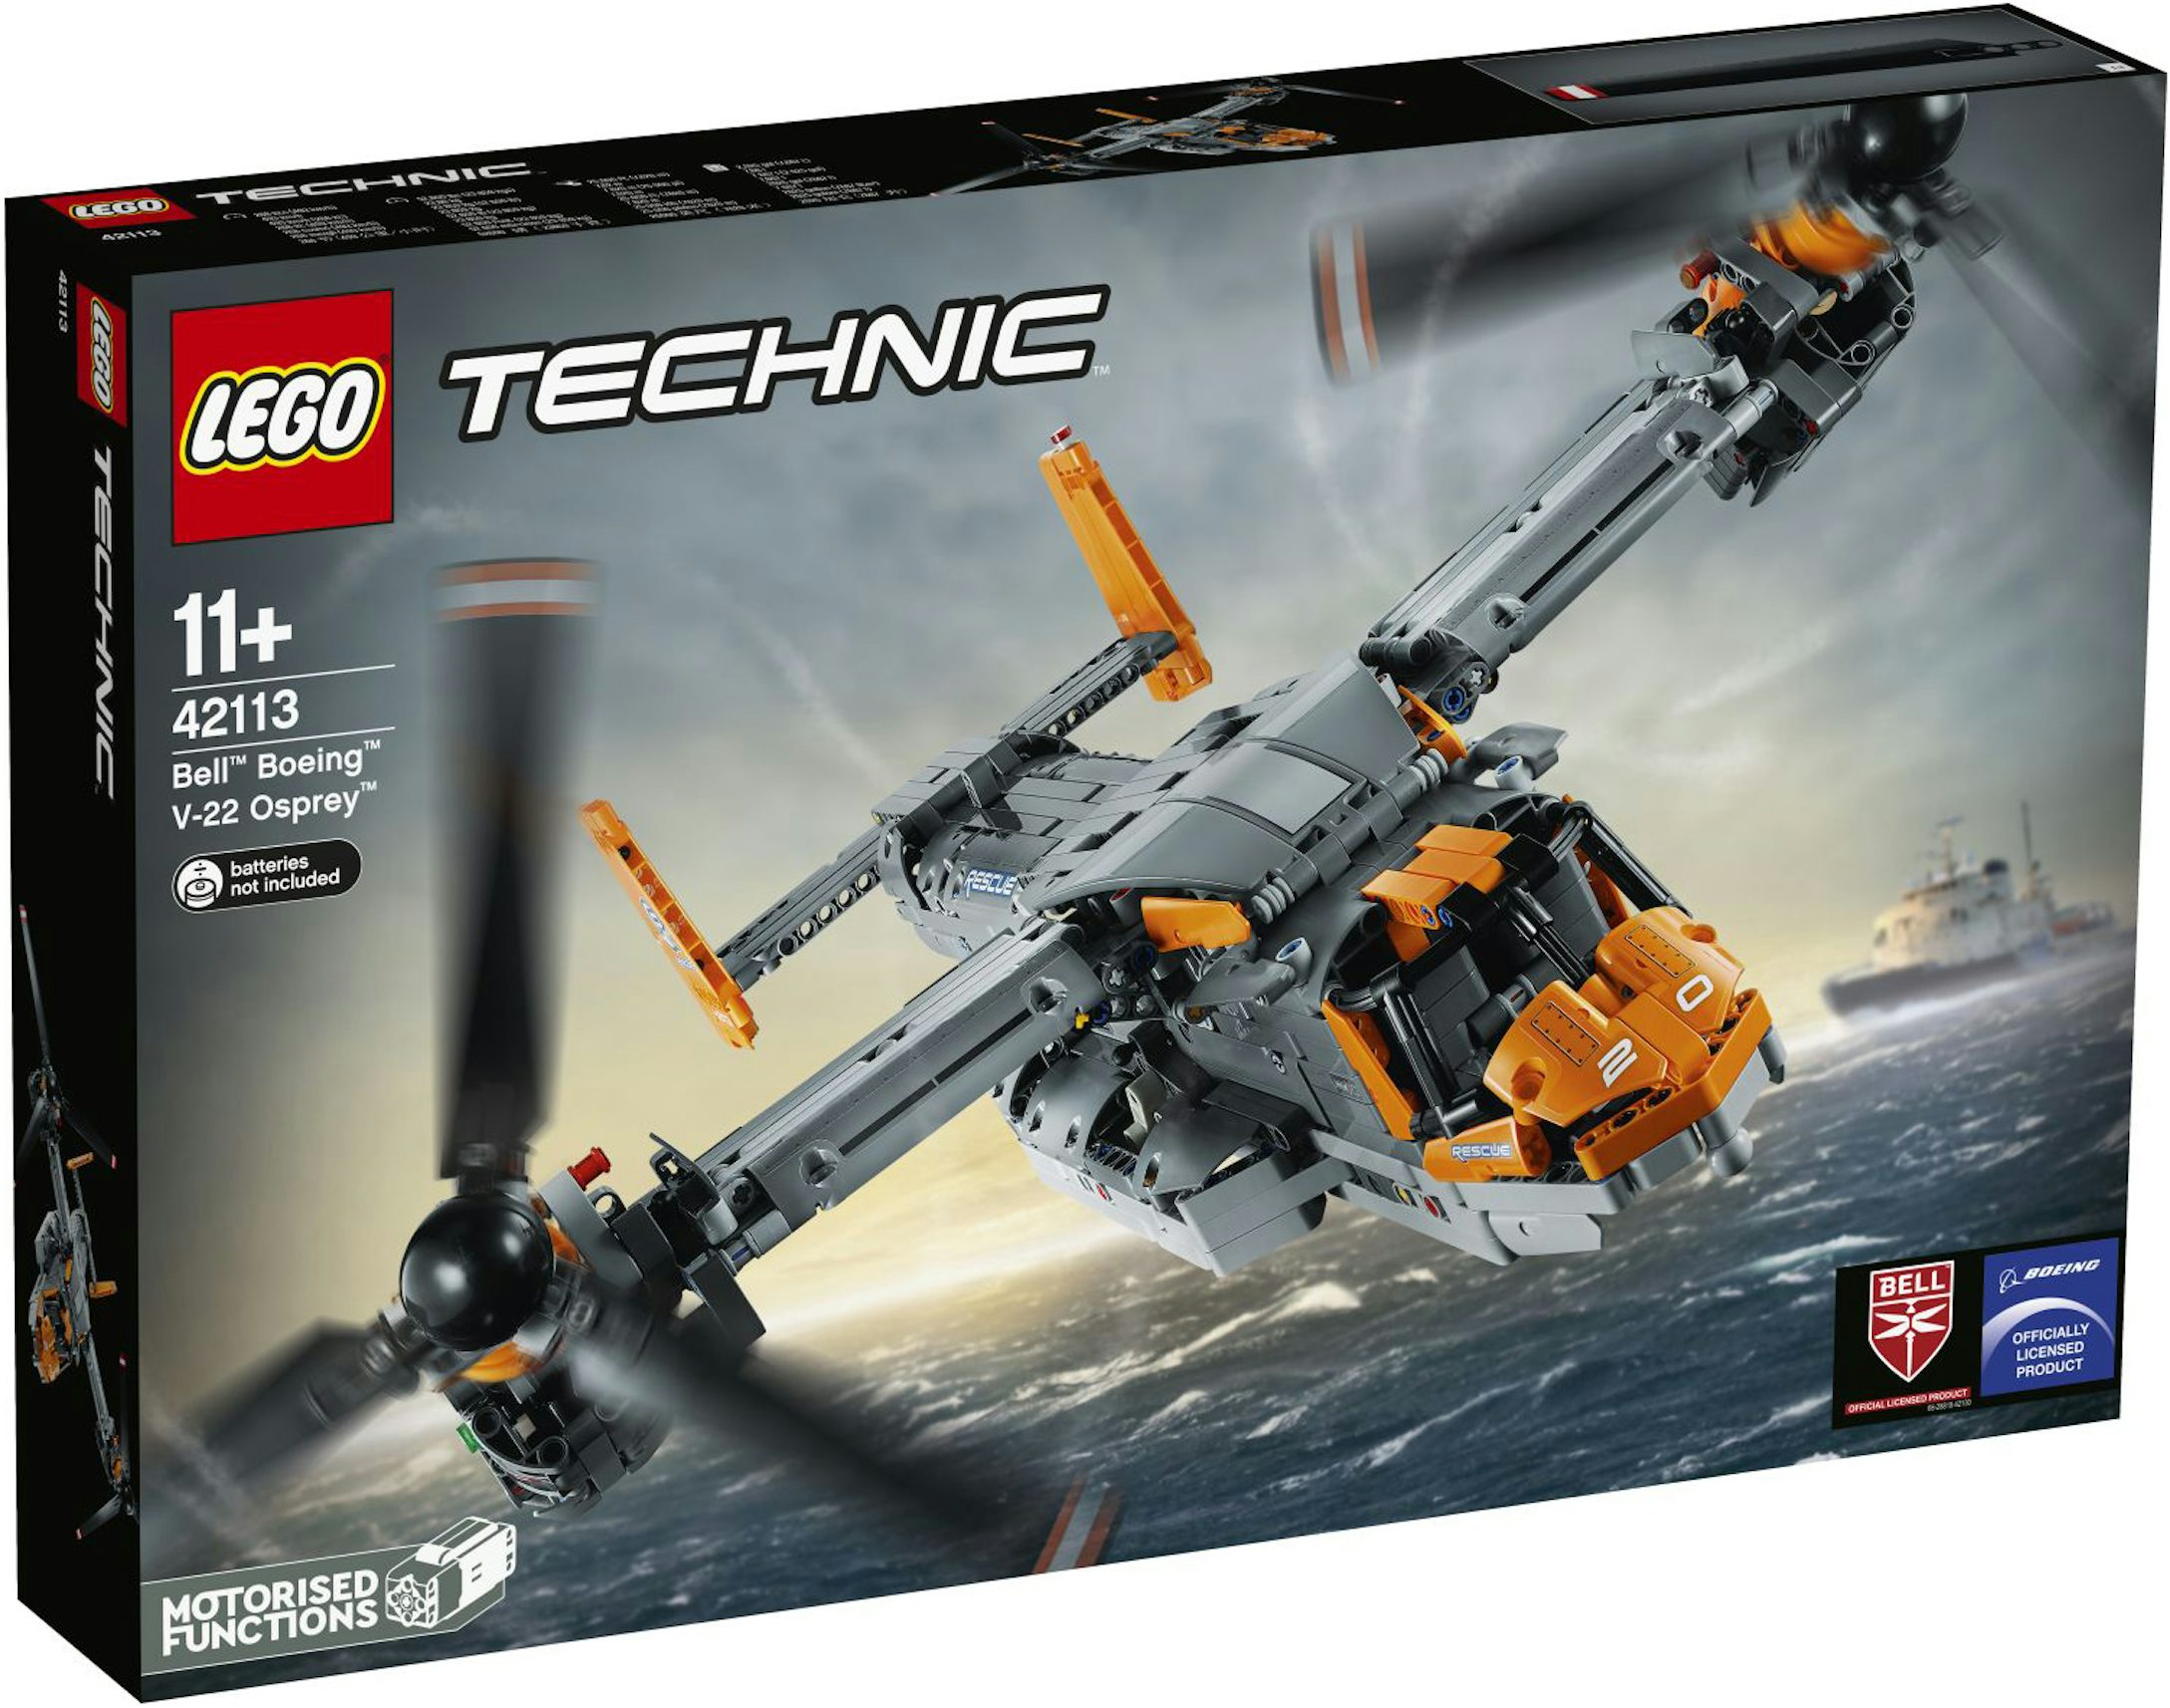 Lego Technic 42064 Ocean Explorer - toys & games - by owner - sale